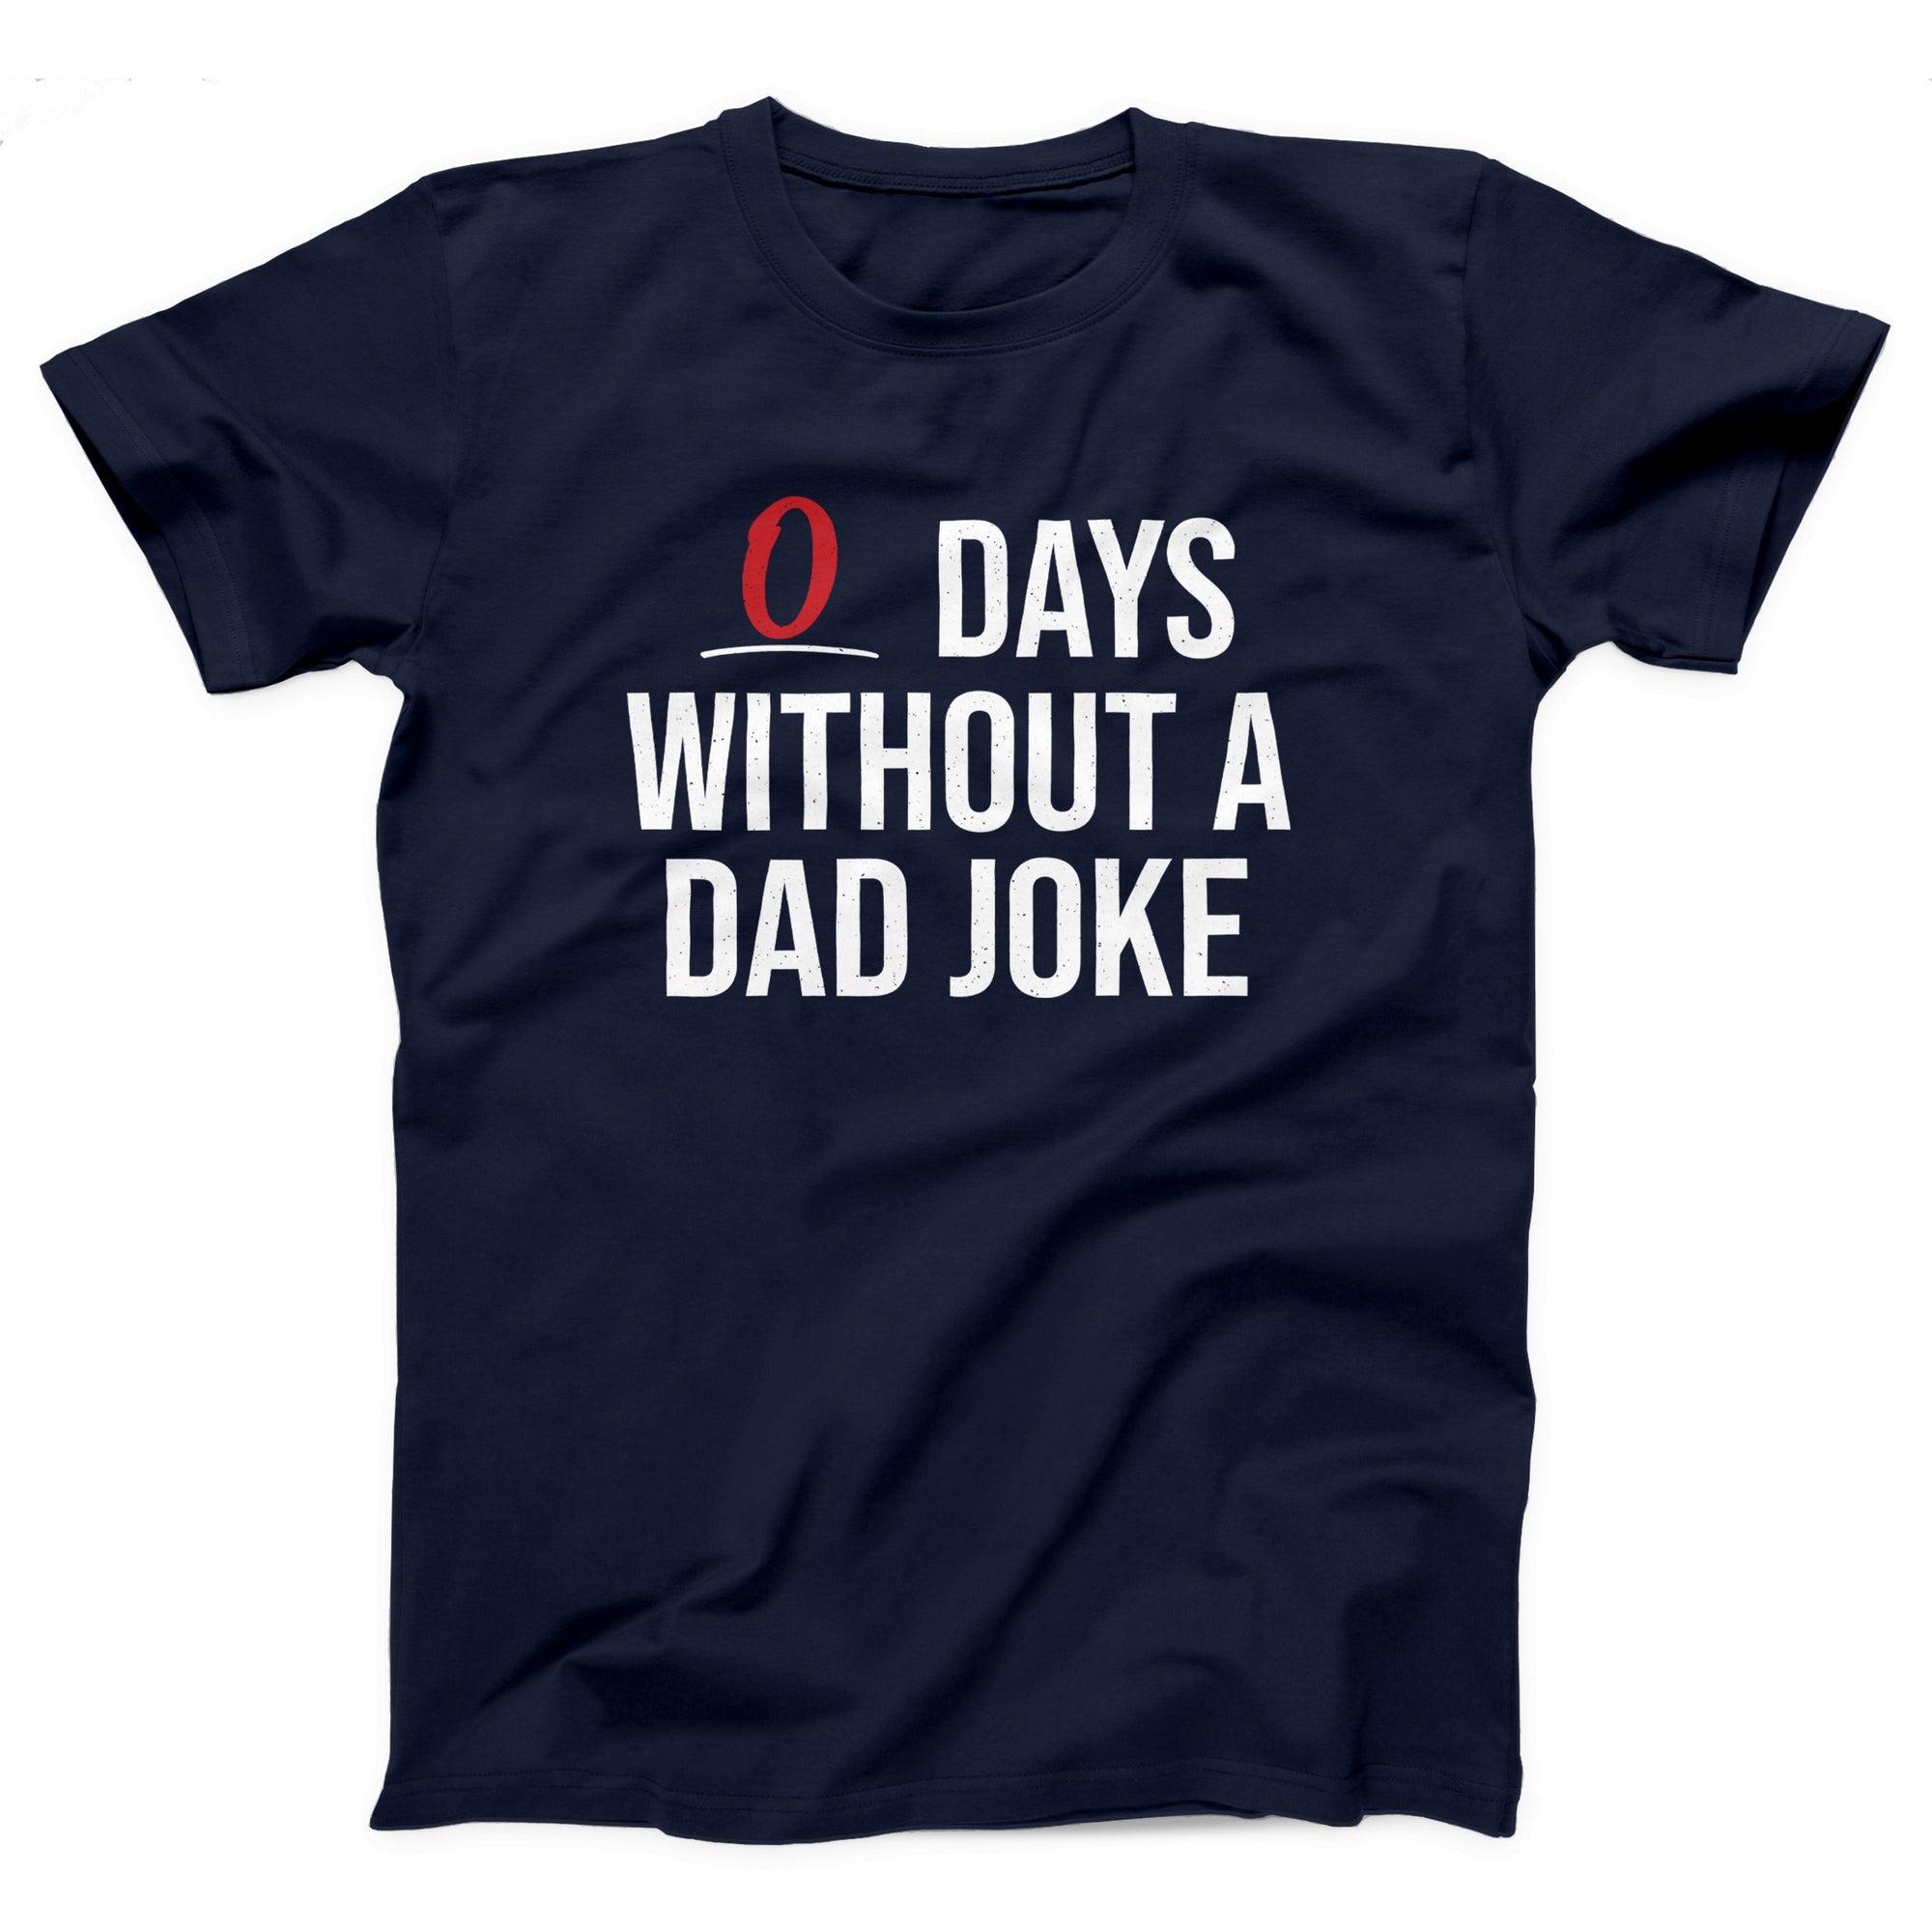 0 Days Without a Dad Joke Adult Unisex T-Shirt - anishphilip